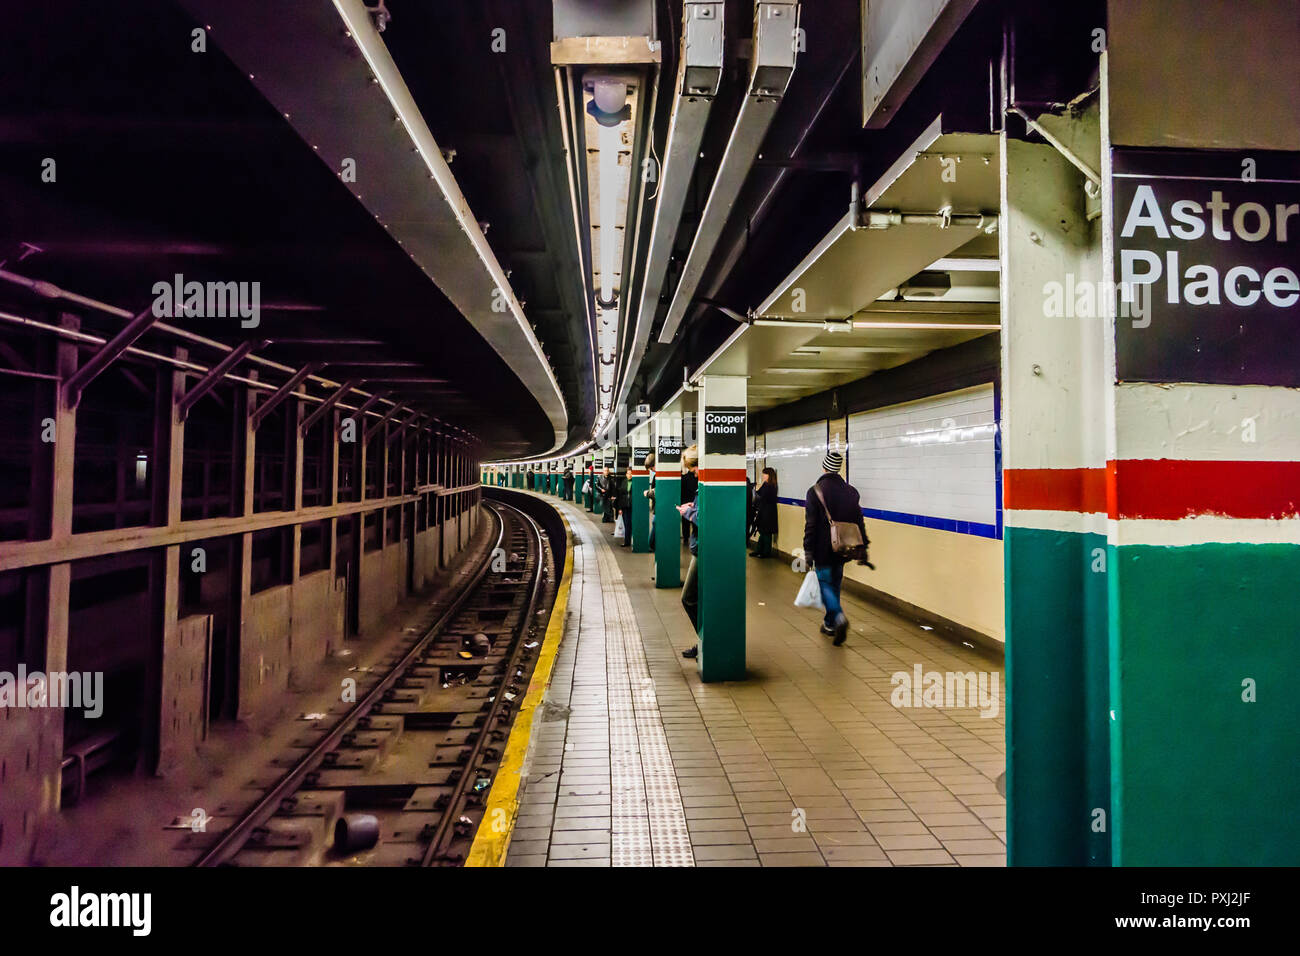 Astor Place – Cooper Union Subway Station Manhattan   New York, New York, USA Stock Photo